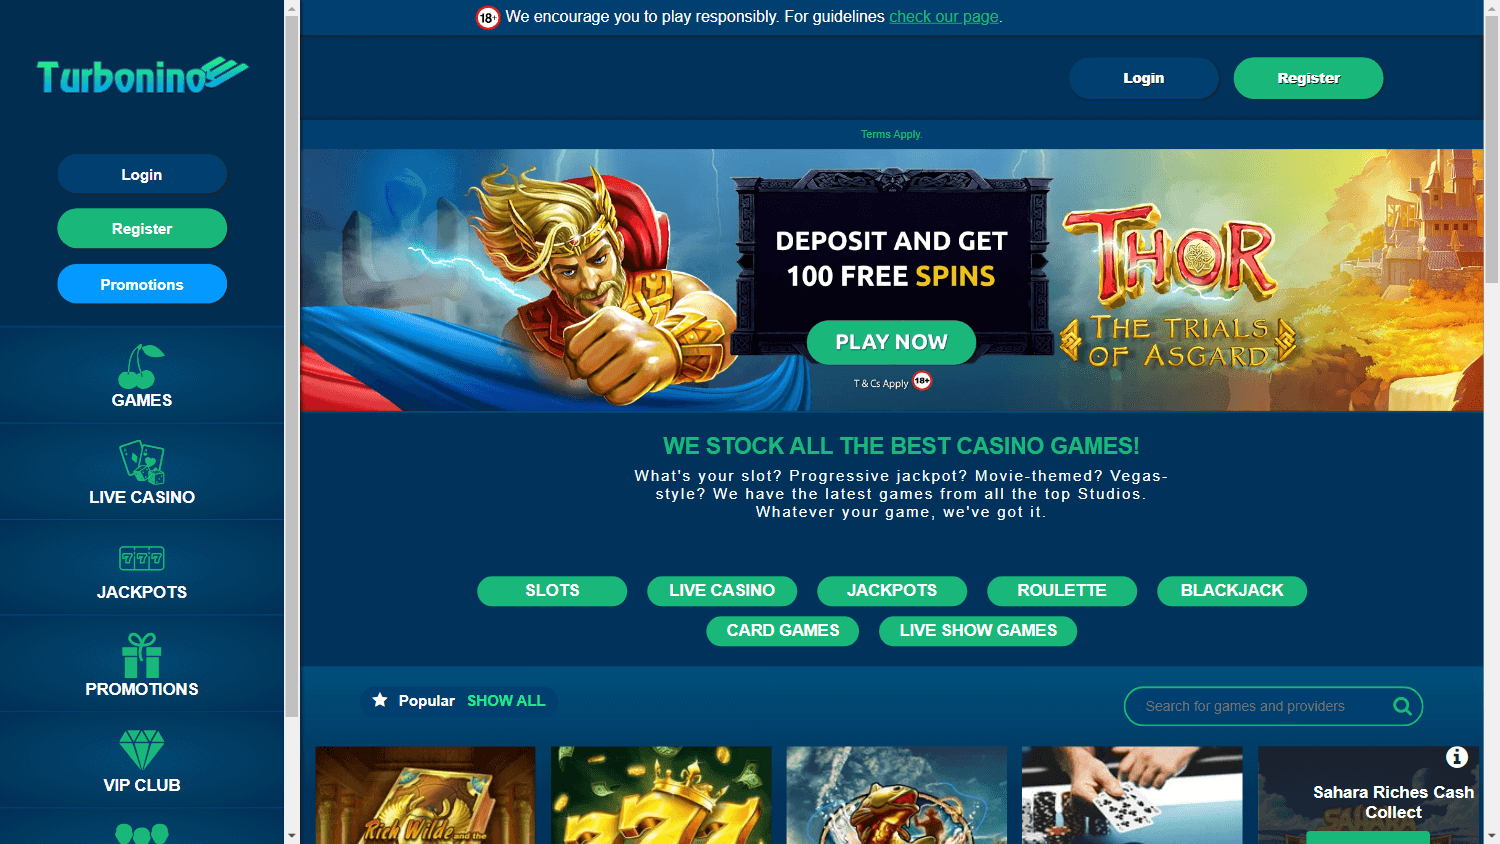 turbonino_casino_homepage_desktop